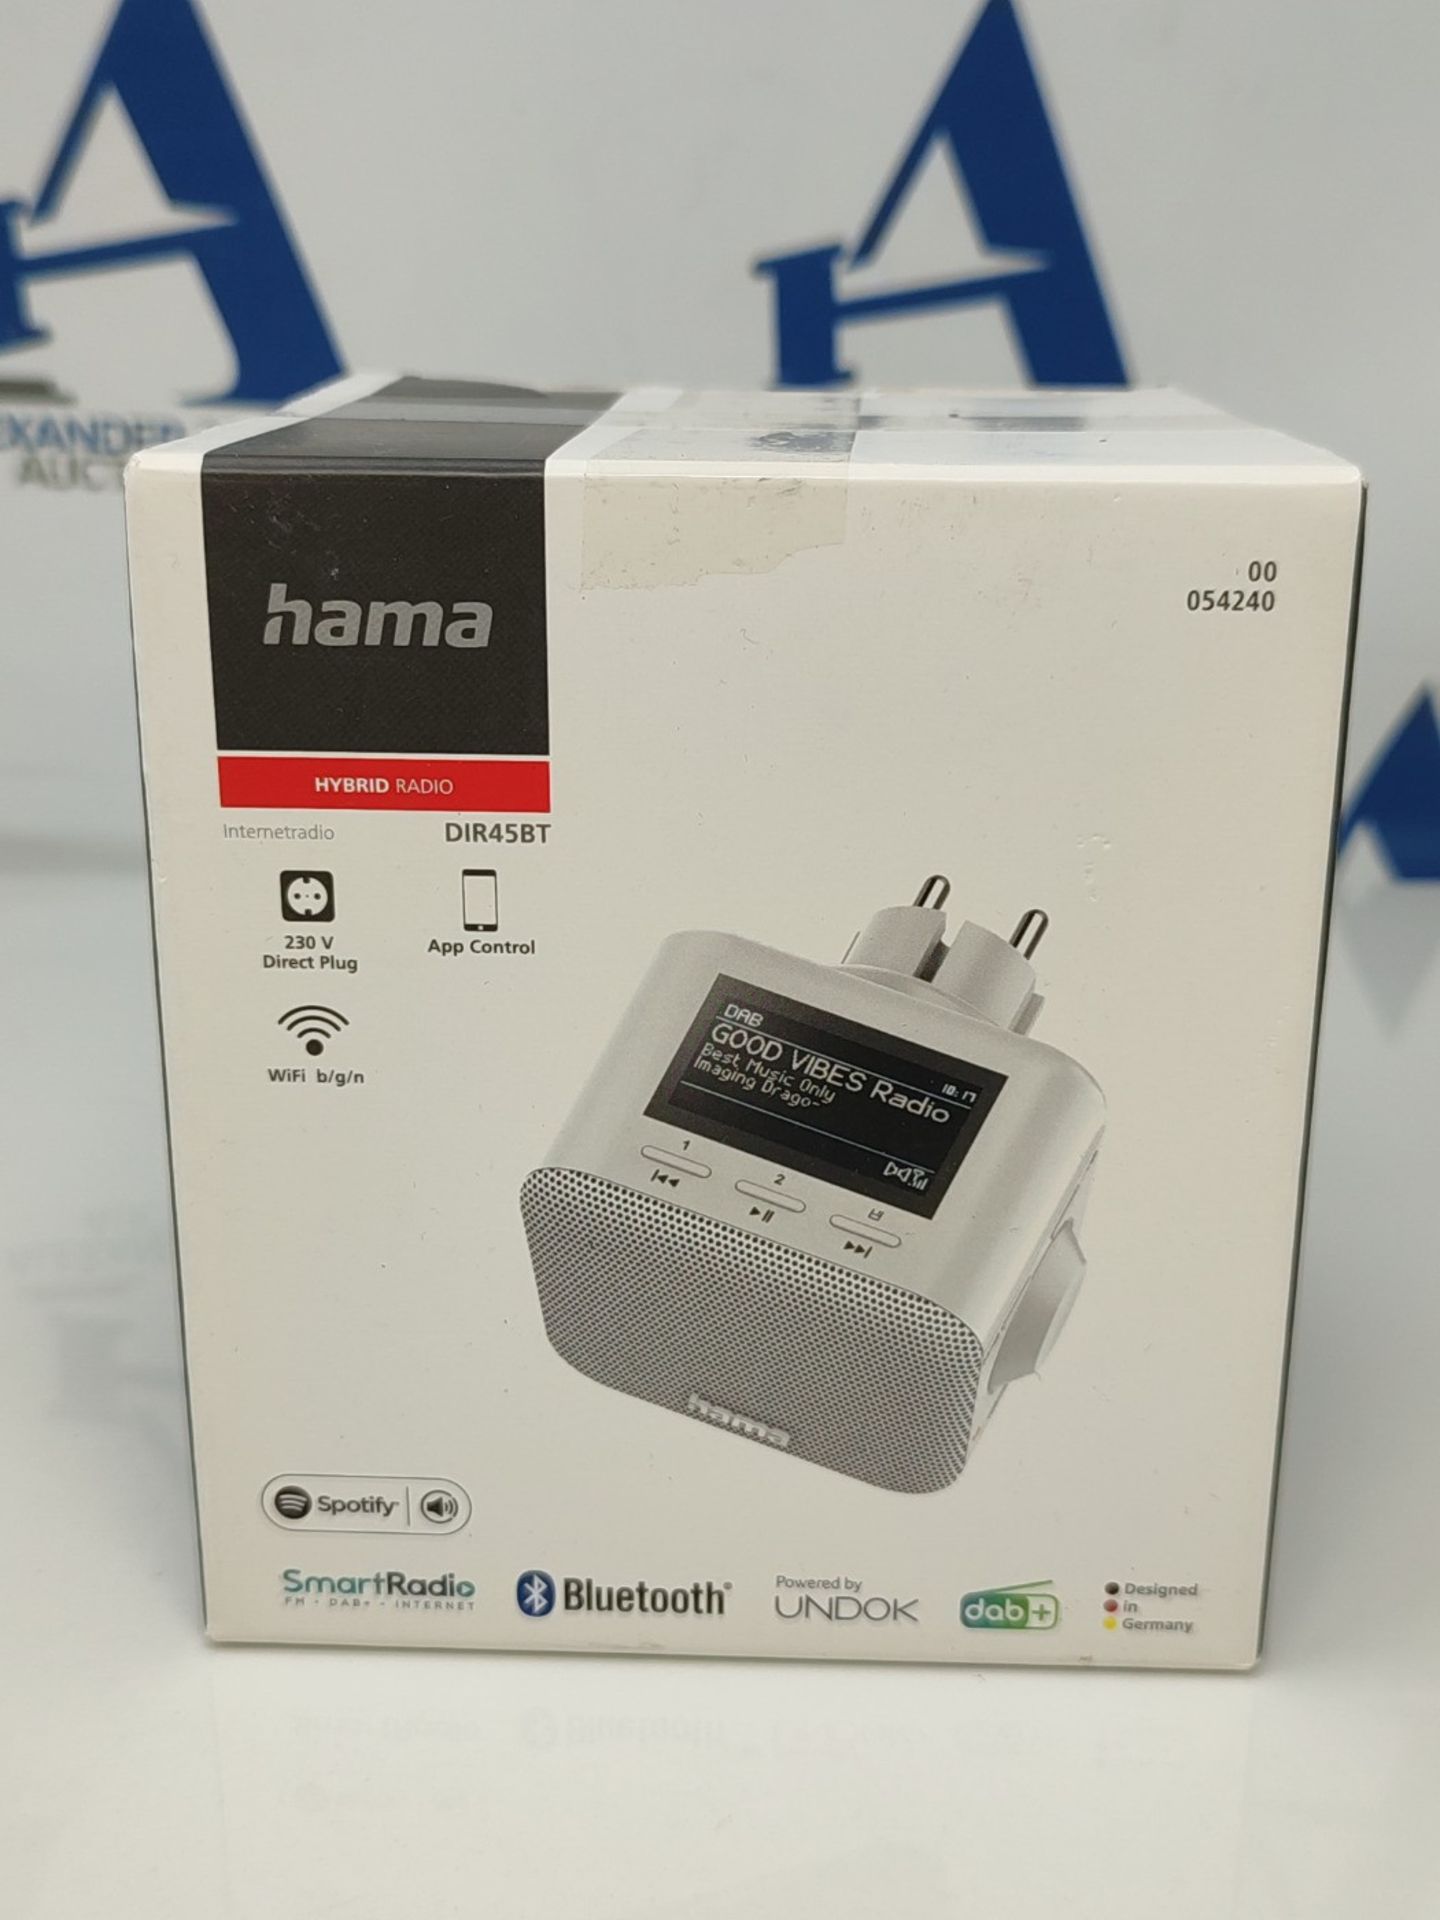 RRP £110.00 Hama Socket Radio DAB Radio DIR45BT Internet Radio DAB+, Bluetooth & Spotify (WiFi kit - Image 2 of 6